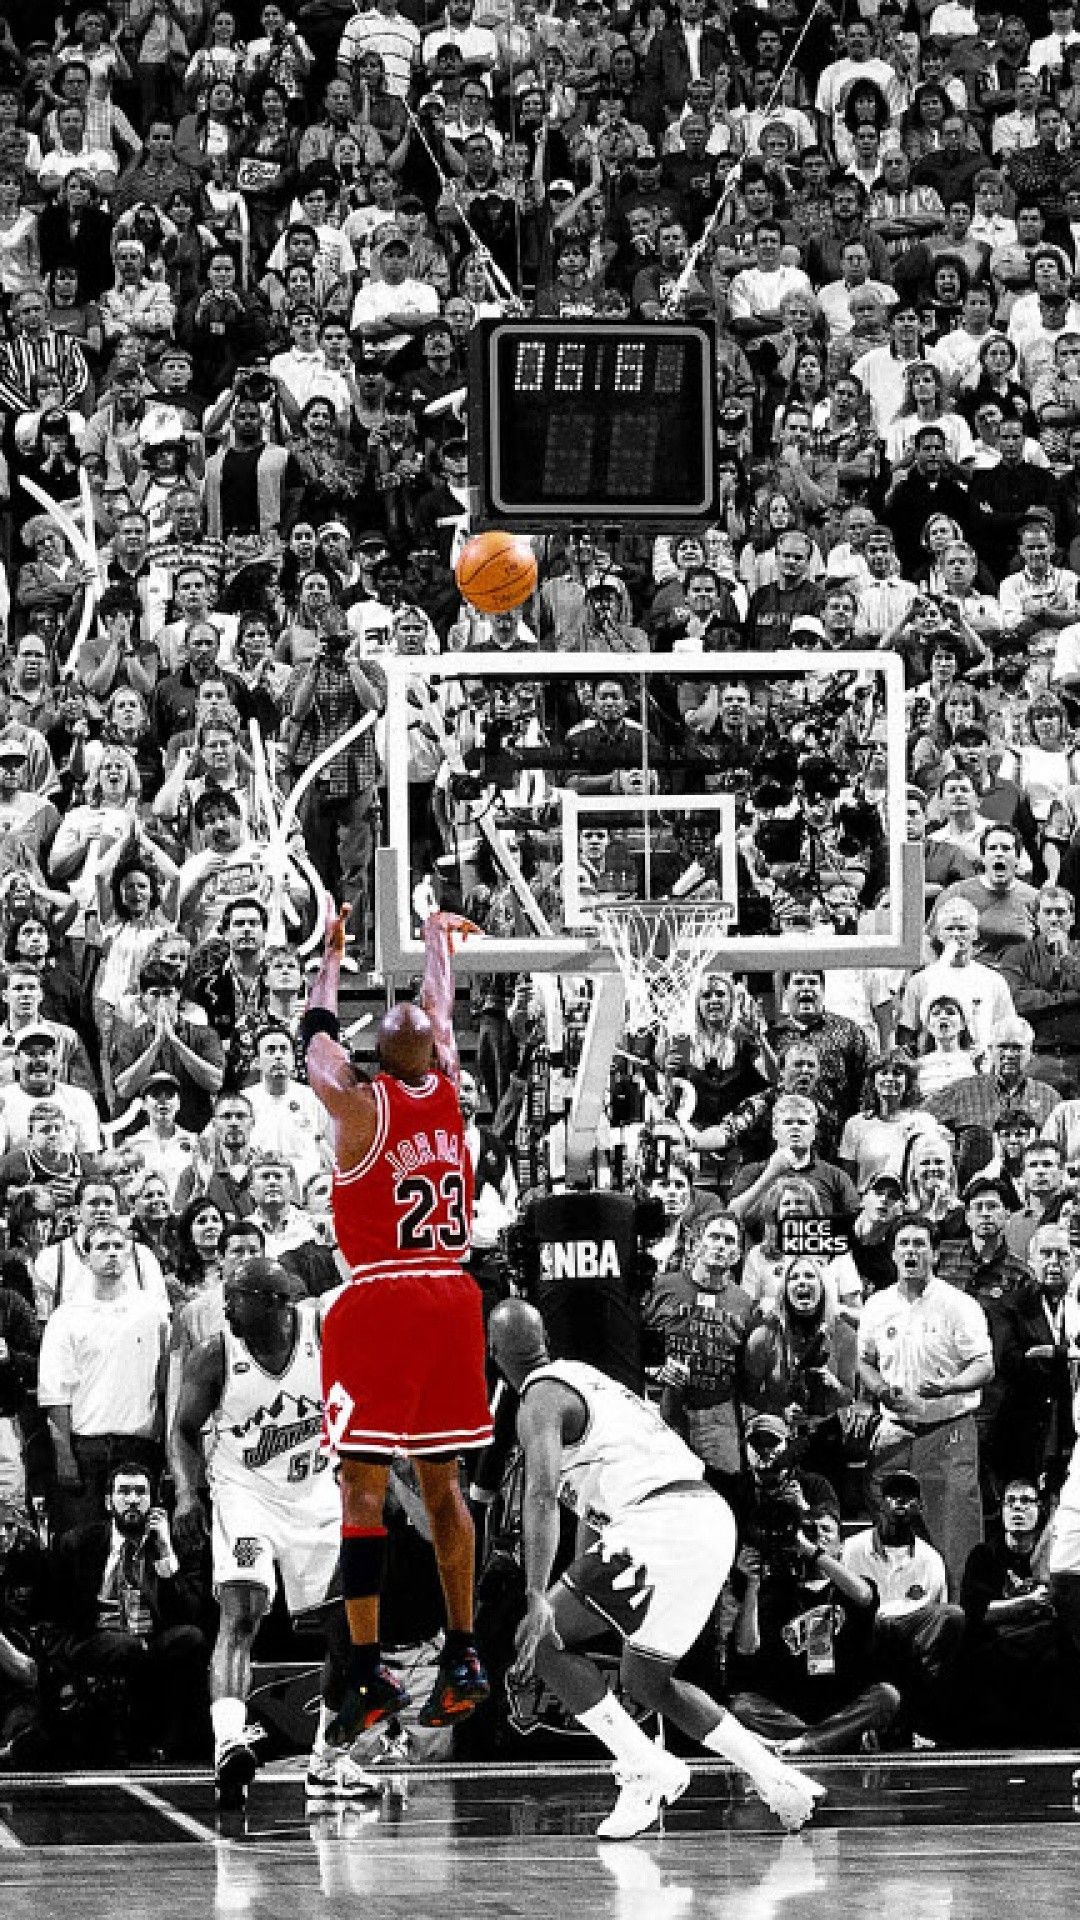 IPhone wallpaper of Michael Jordan hitting a game winning shot over Bryon Russell in the 1998 NBA Finals. - Michael Jordan